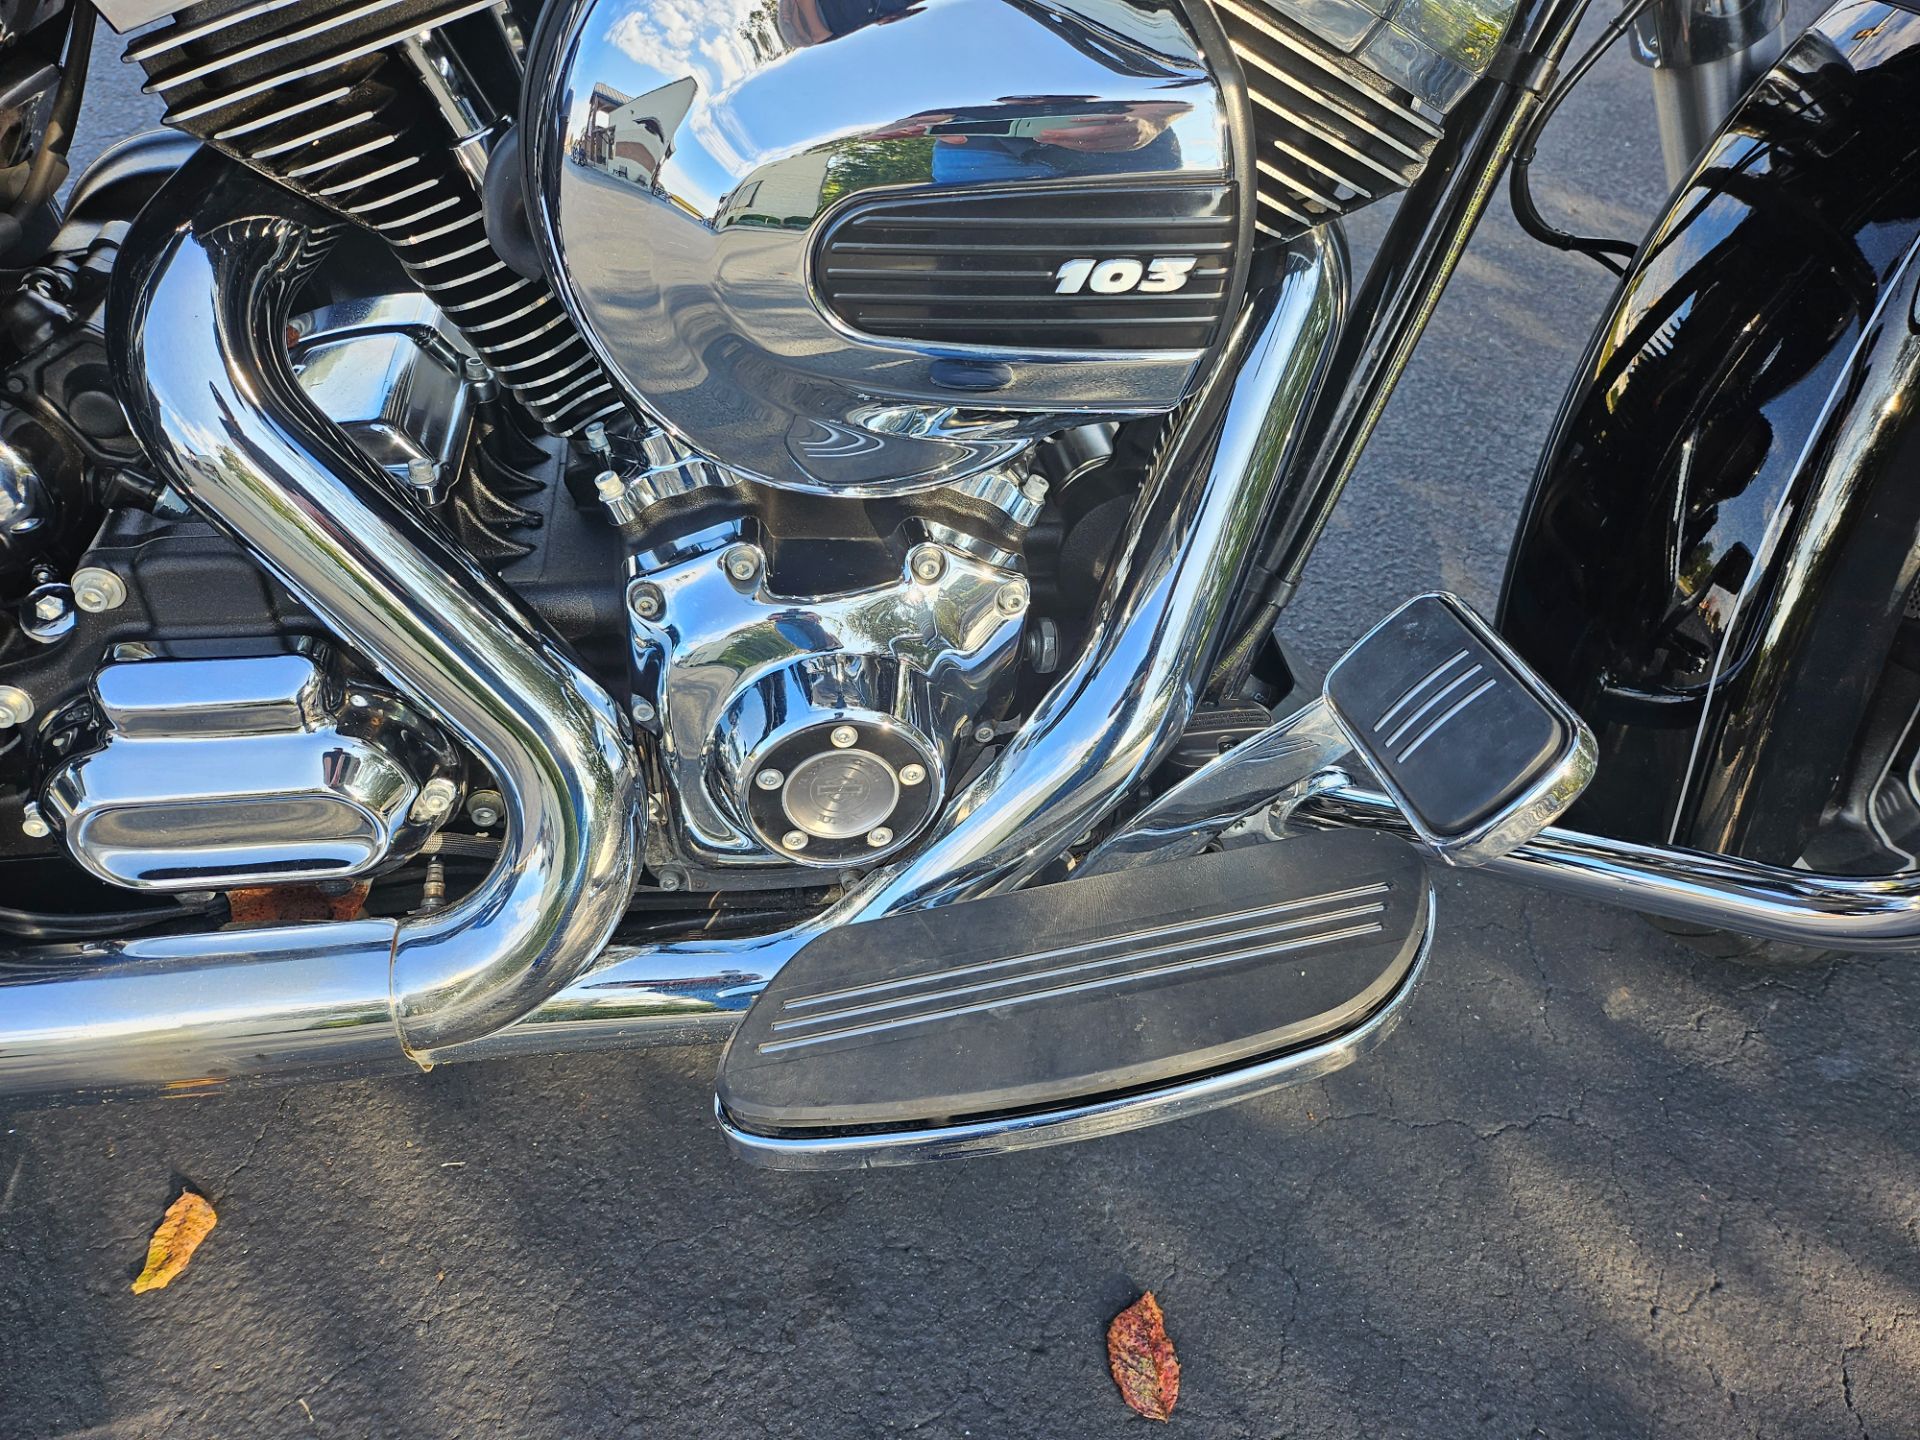 2016 Harley-Davidson Street Glide® Special in Lynchburg, Virginia - Photo 26